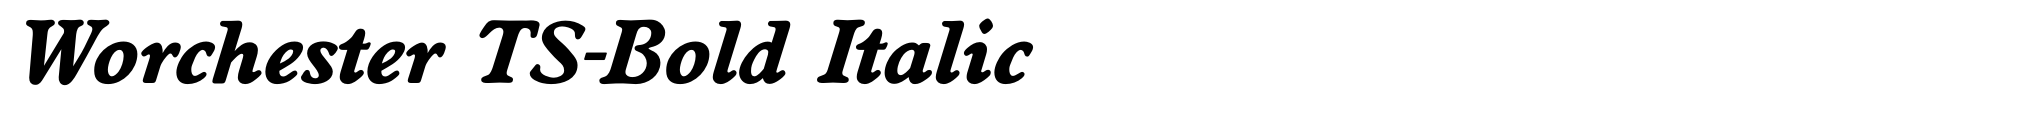 Worchester TS-Bold Italic image